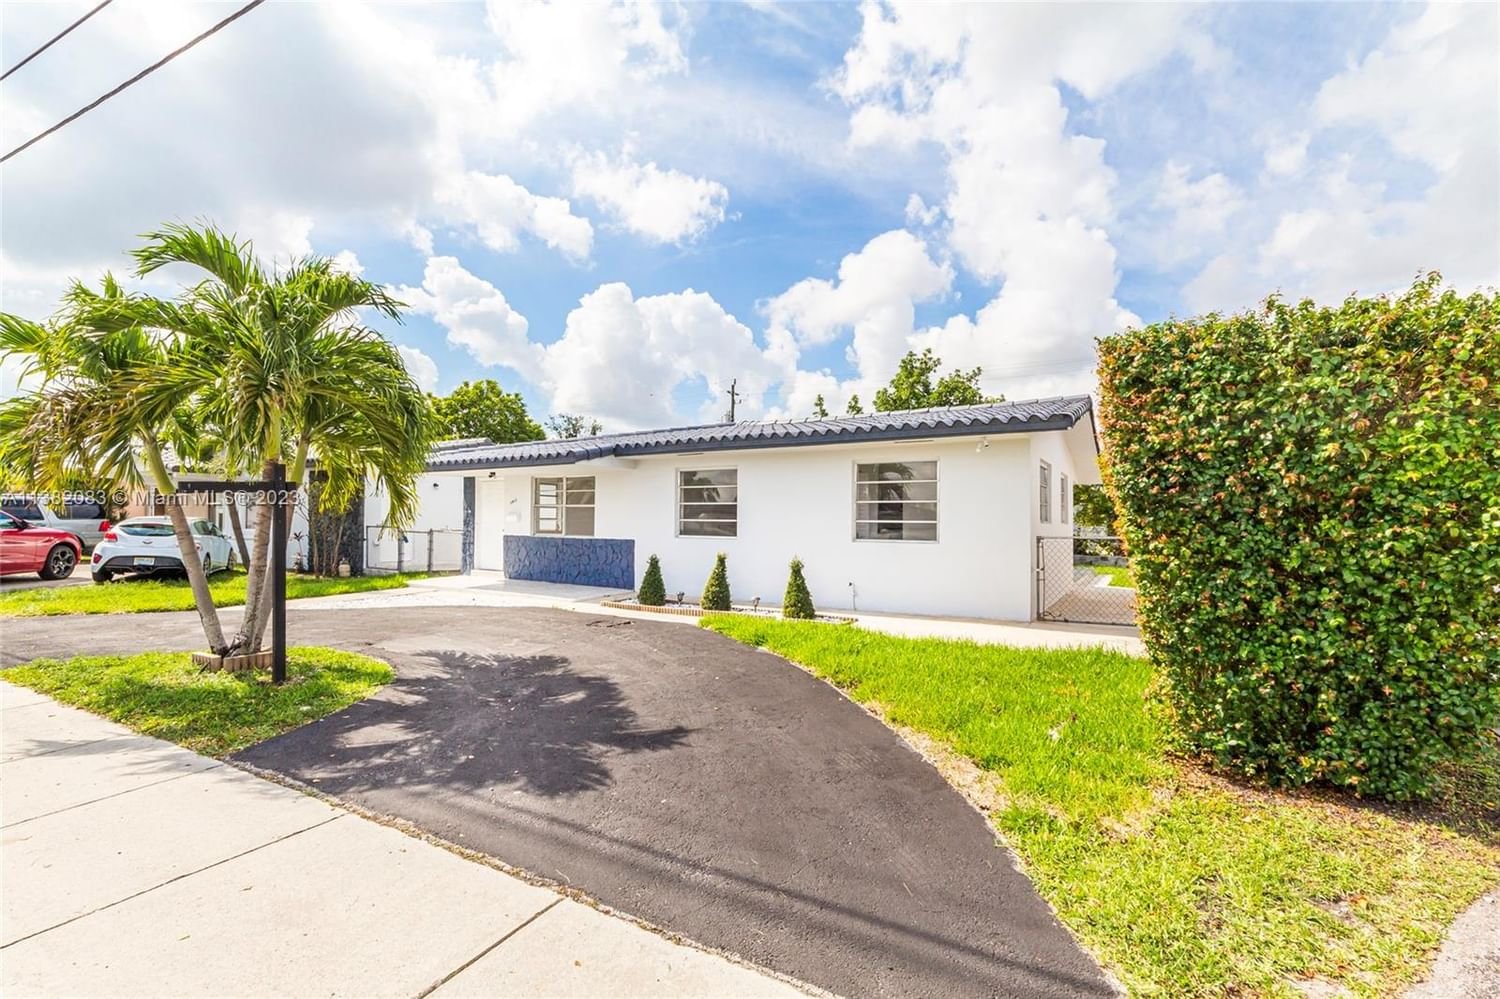 Real estate property located at 10410 24th St, Miami-Dade County, Miami, FL